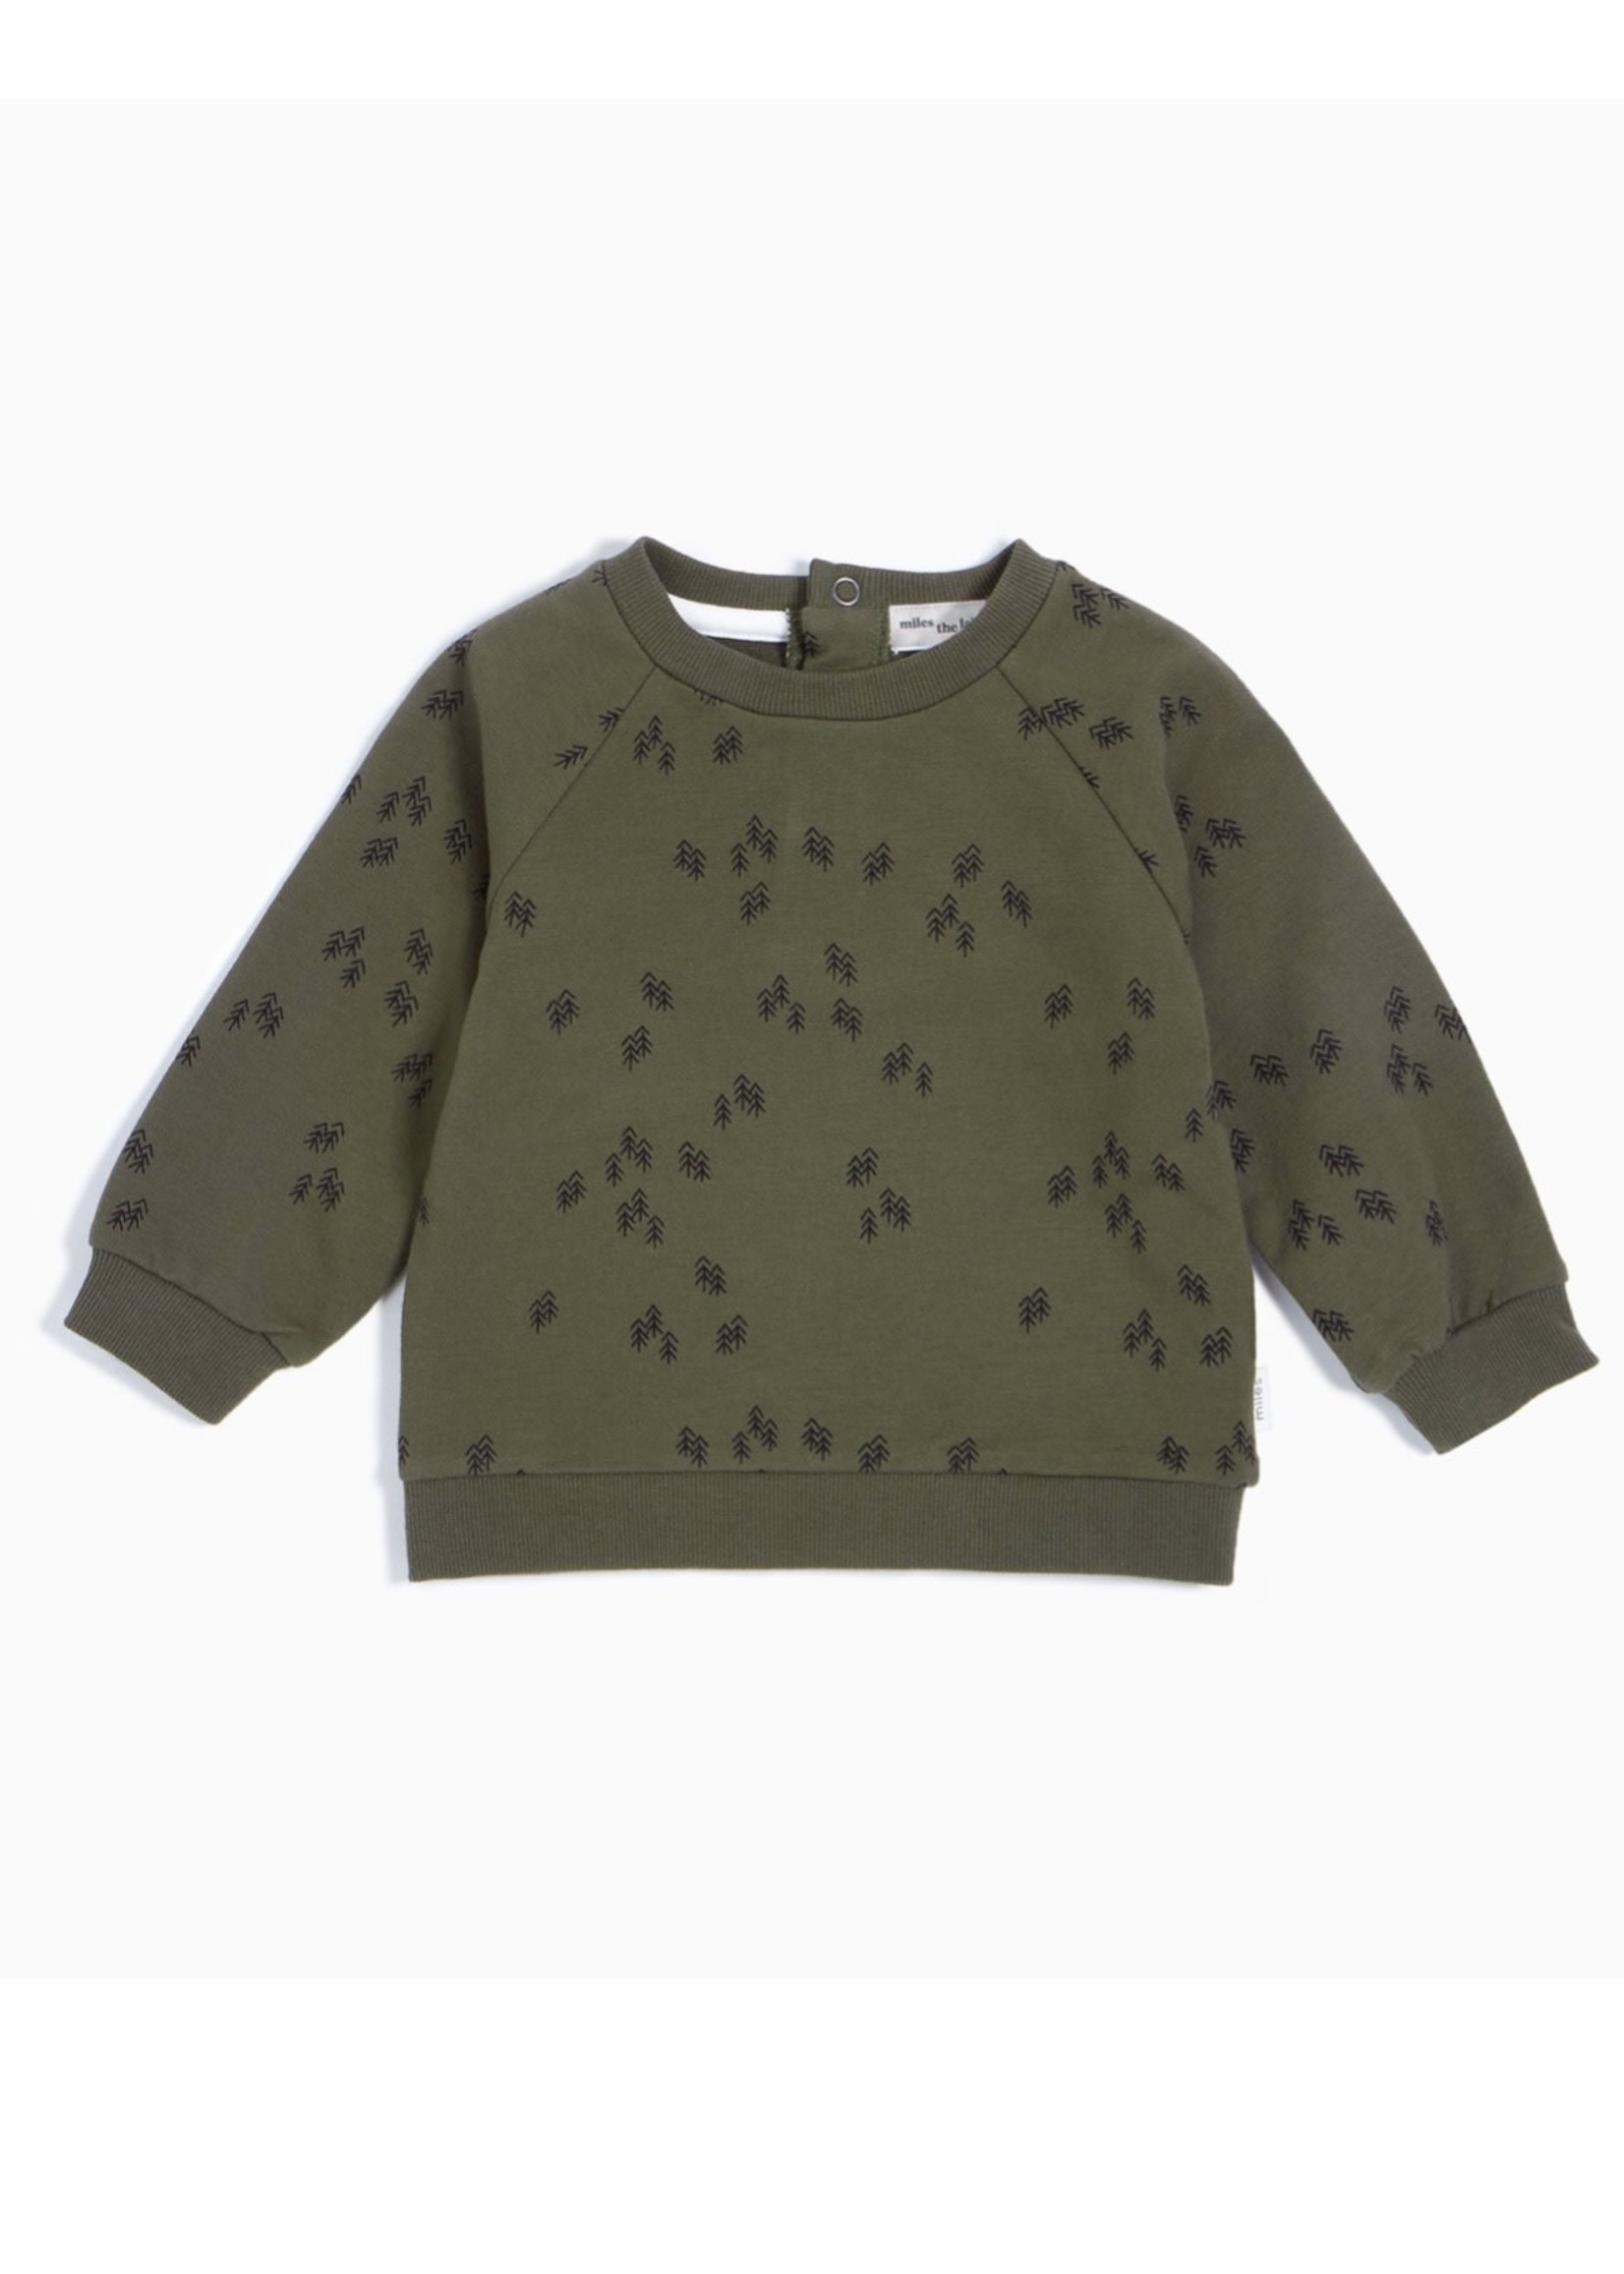 Miles the Label, Chevron Tree Print on Pine Baby Sweatshirt